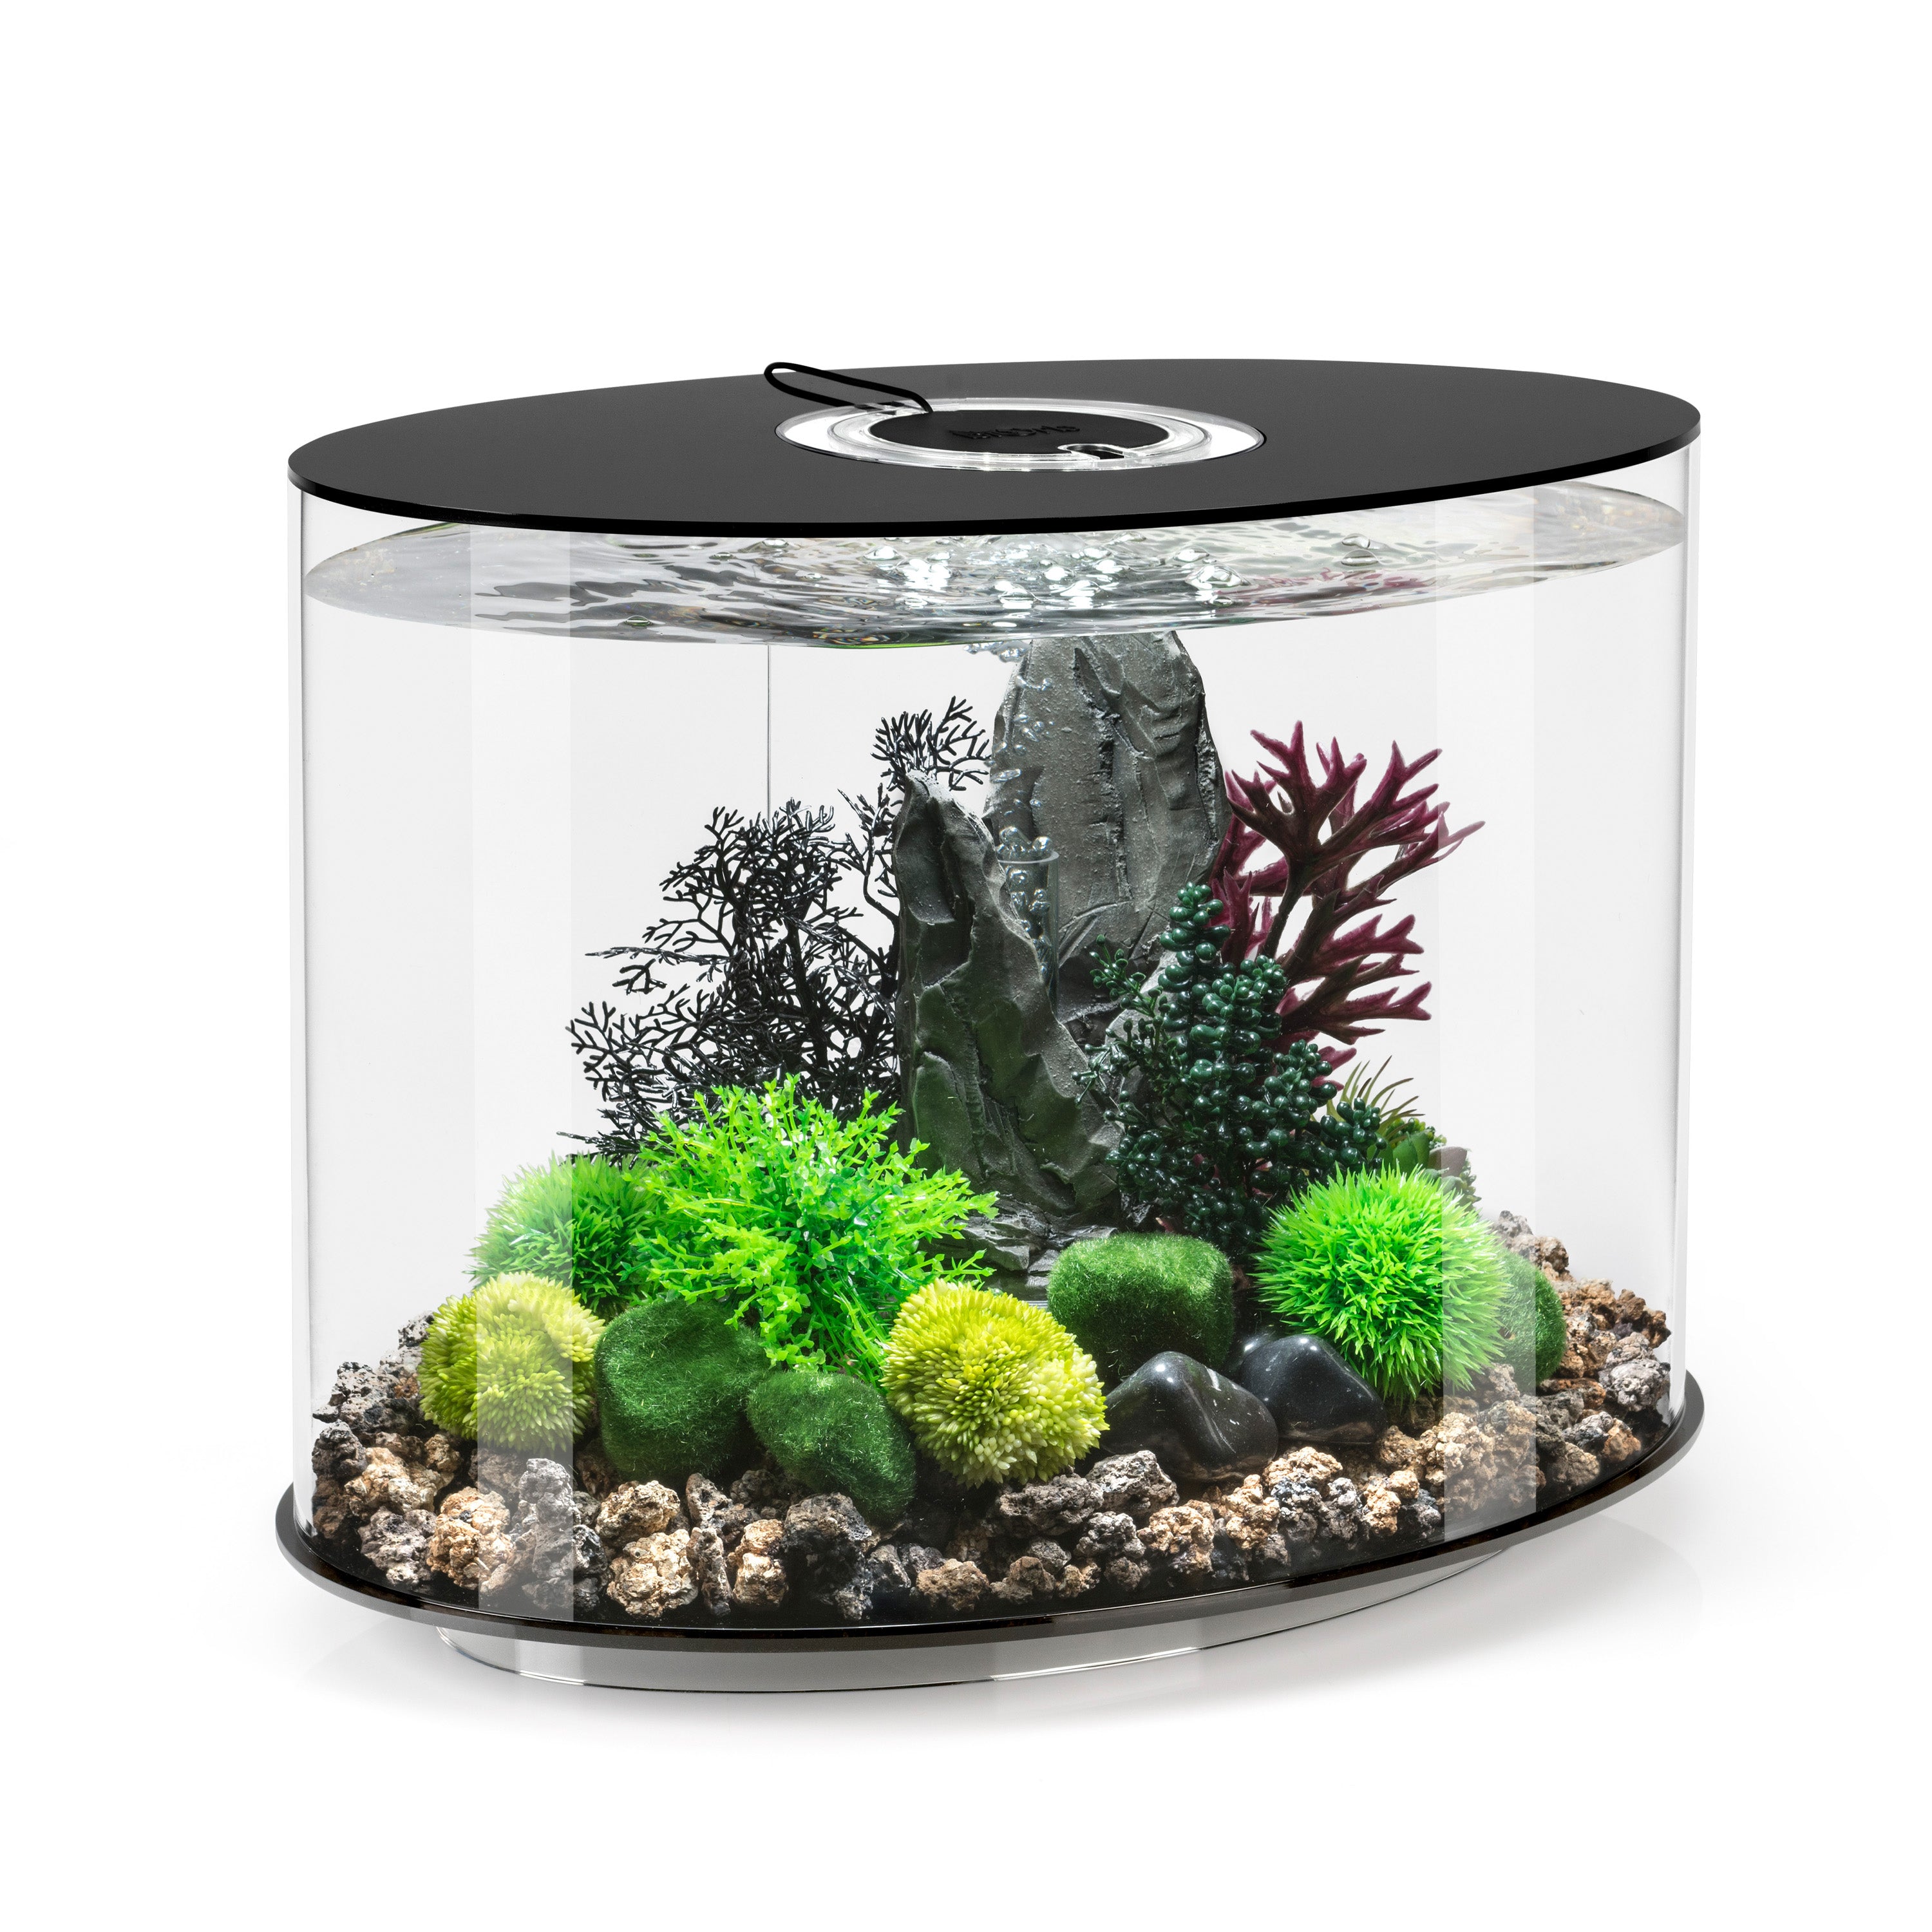 LOOP 30 Aquarium with Standard Light - 8 gallon - Black